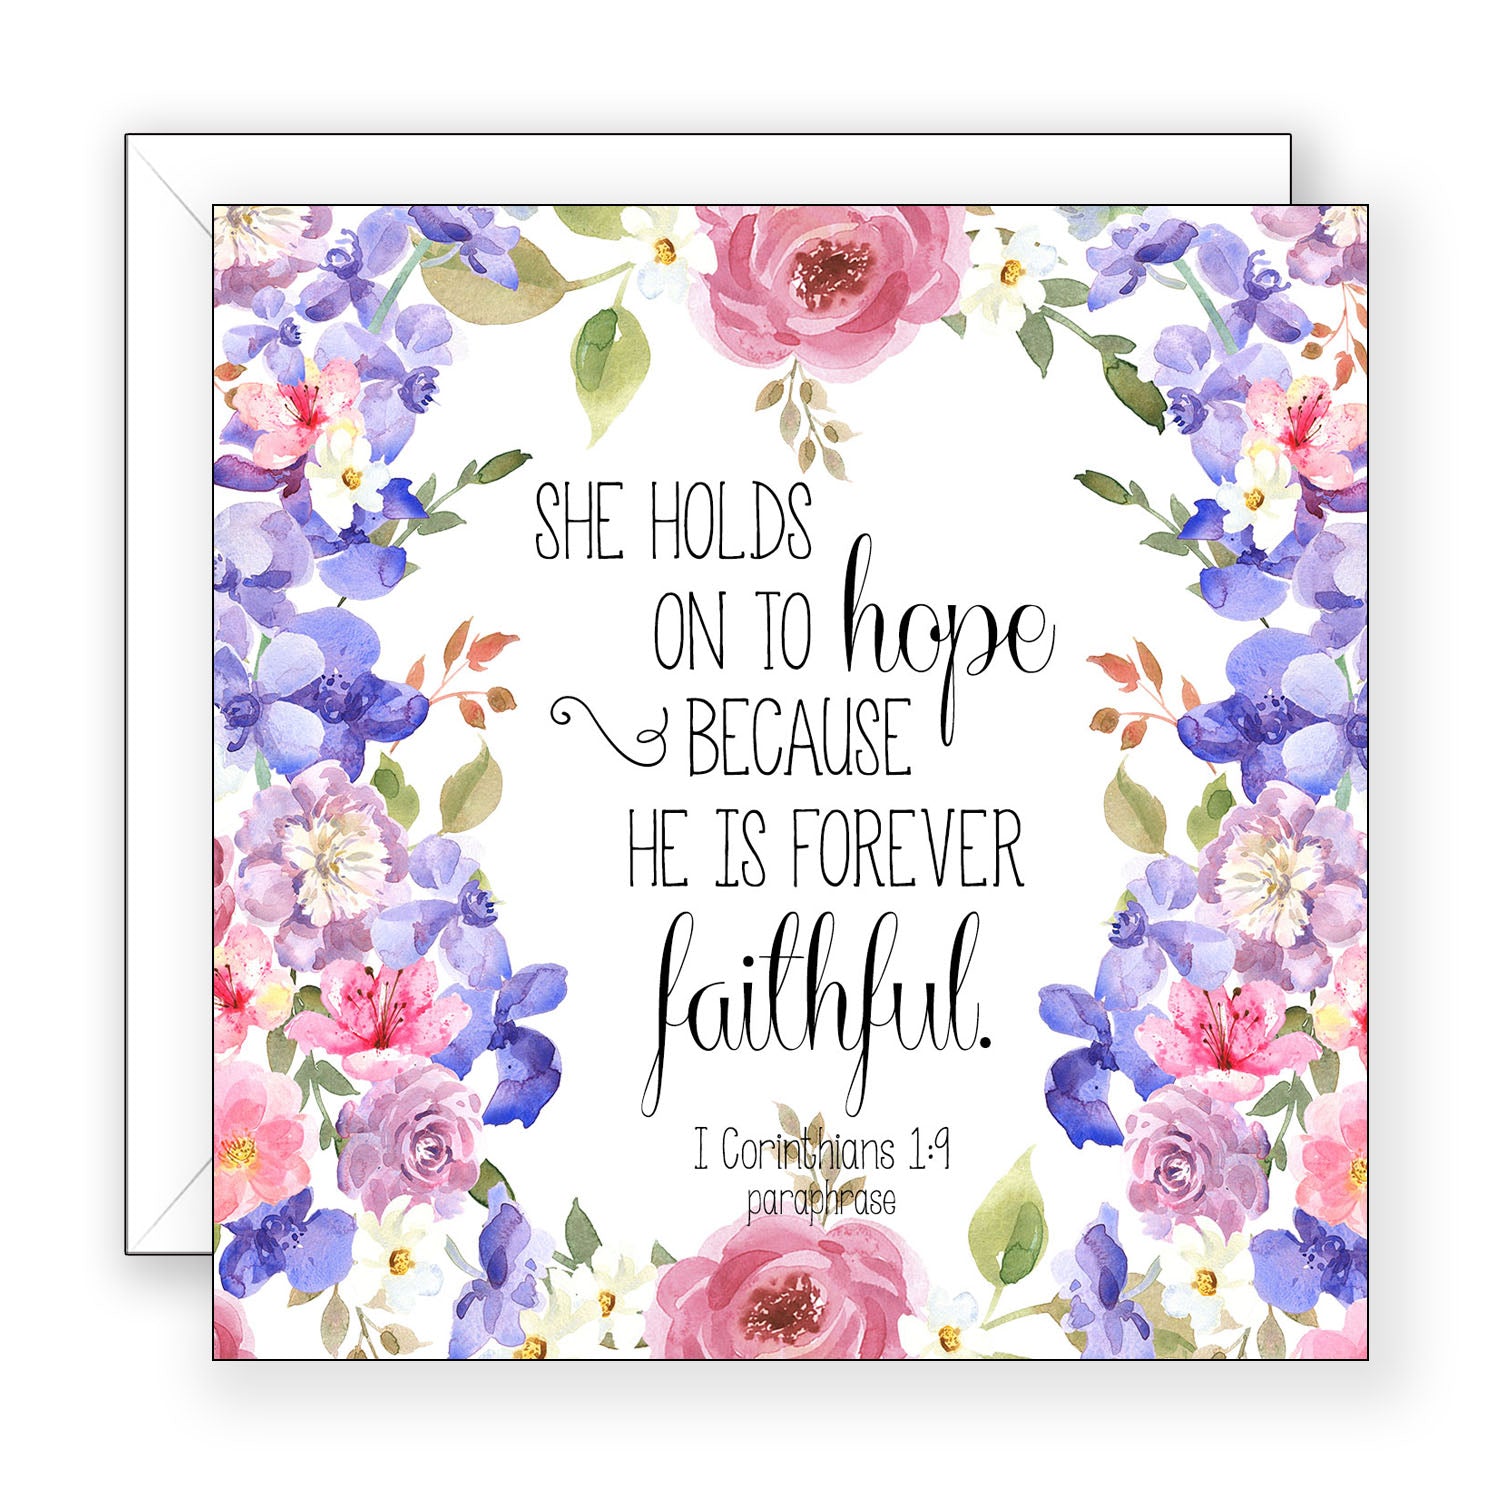 She Holds On To Hope (I Corinthians 1:9 paraphrase) - Encouragement Card